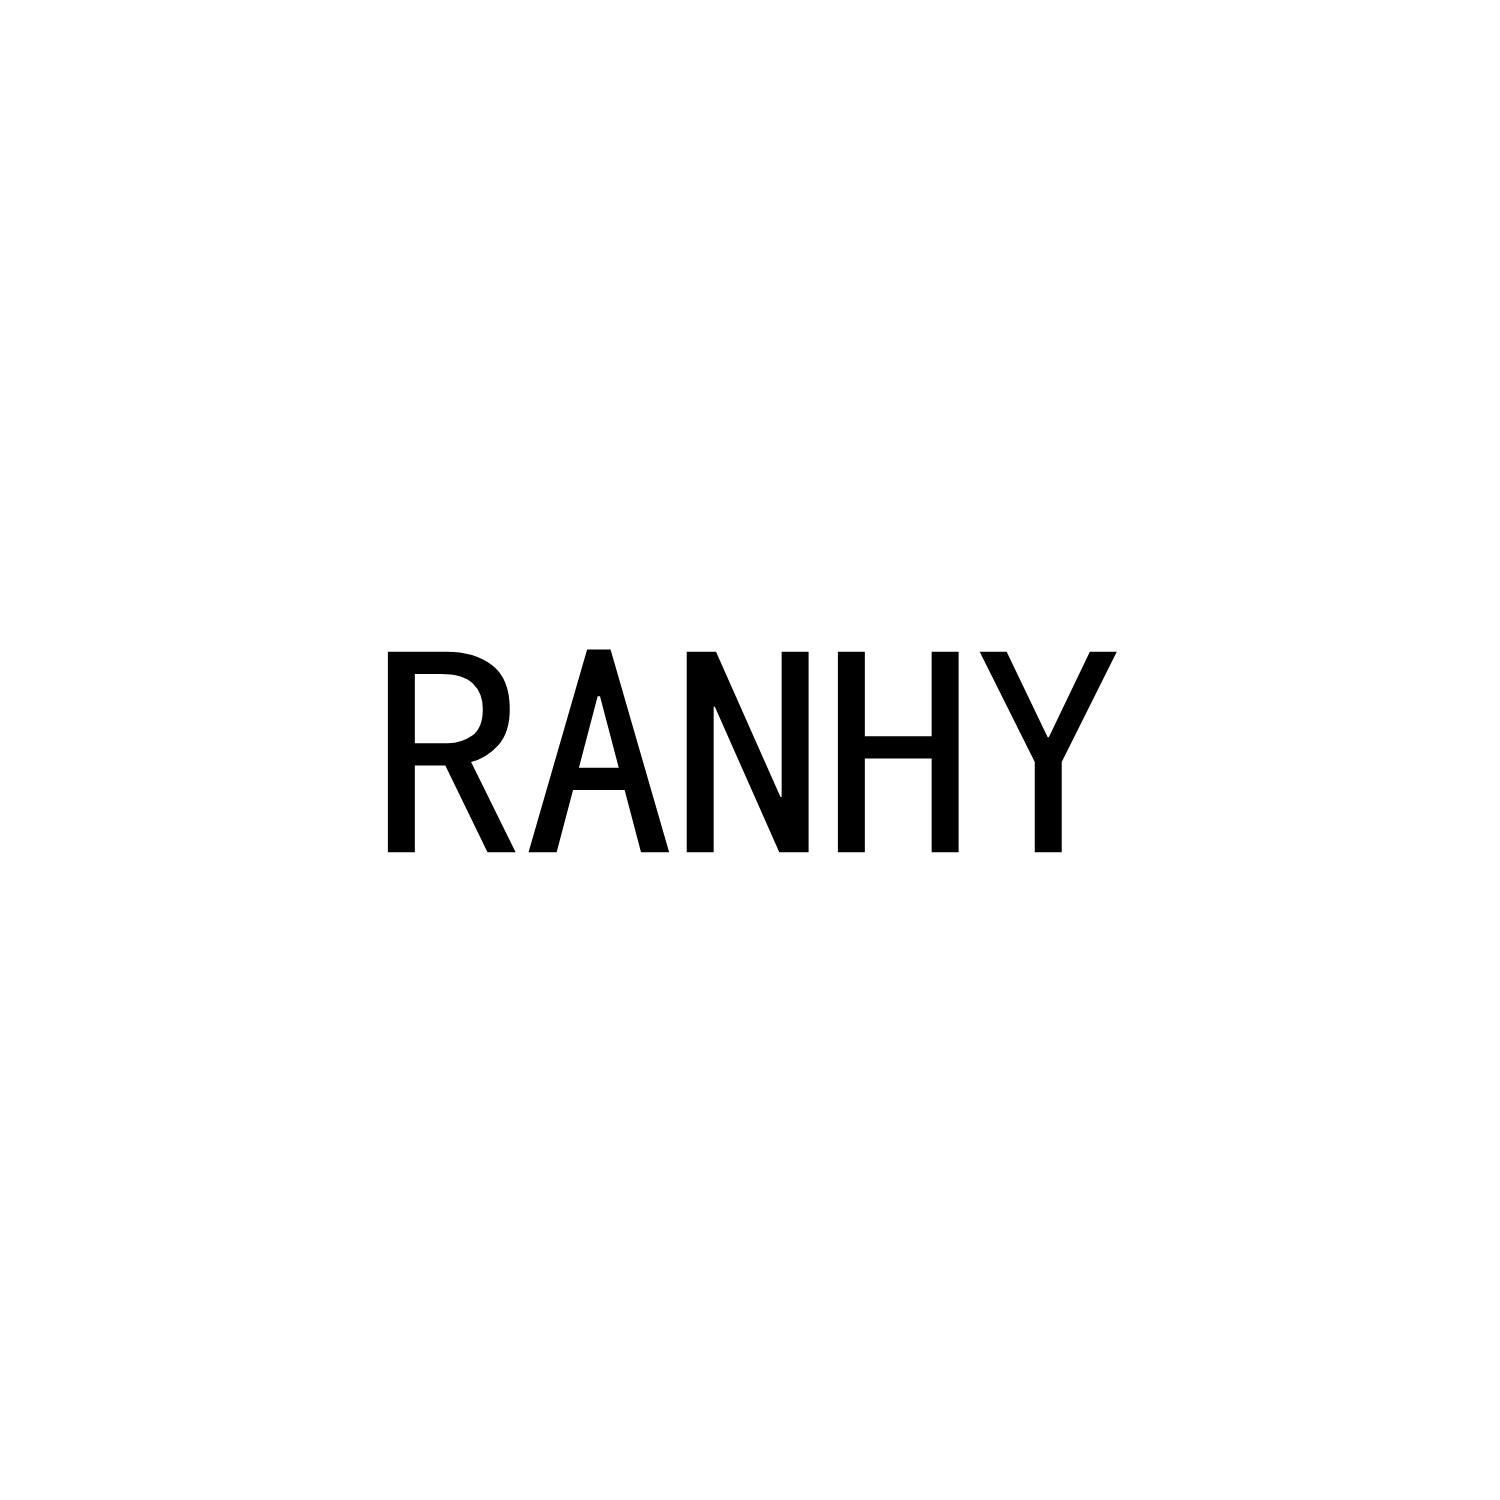 RANHY